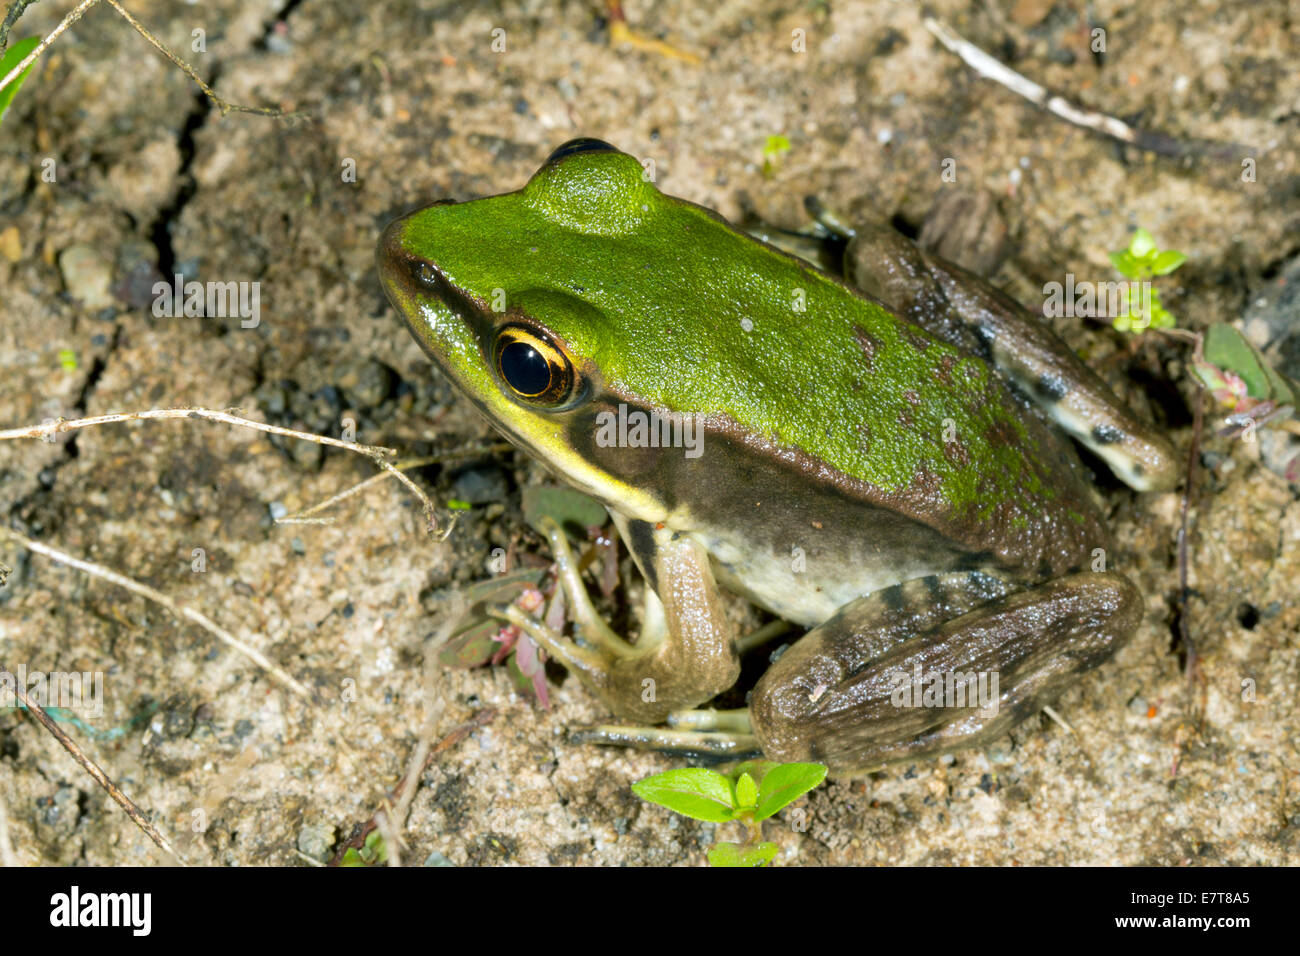 Neotropical green frog (Lithobates palmipes) in the Ecuadorian Amazon. Stock Photo